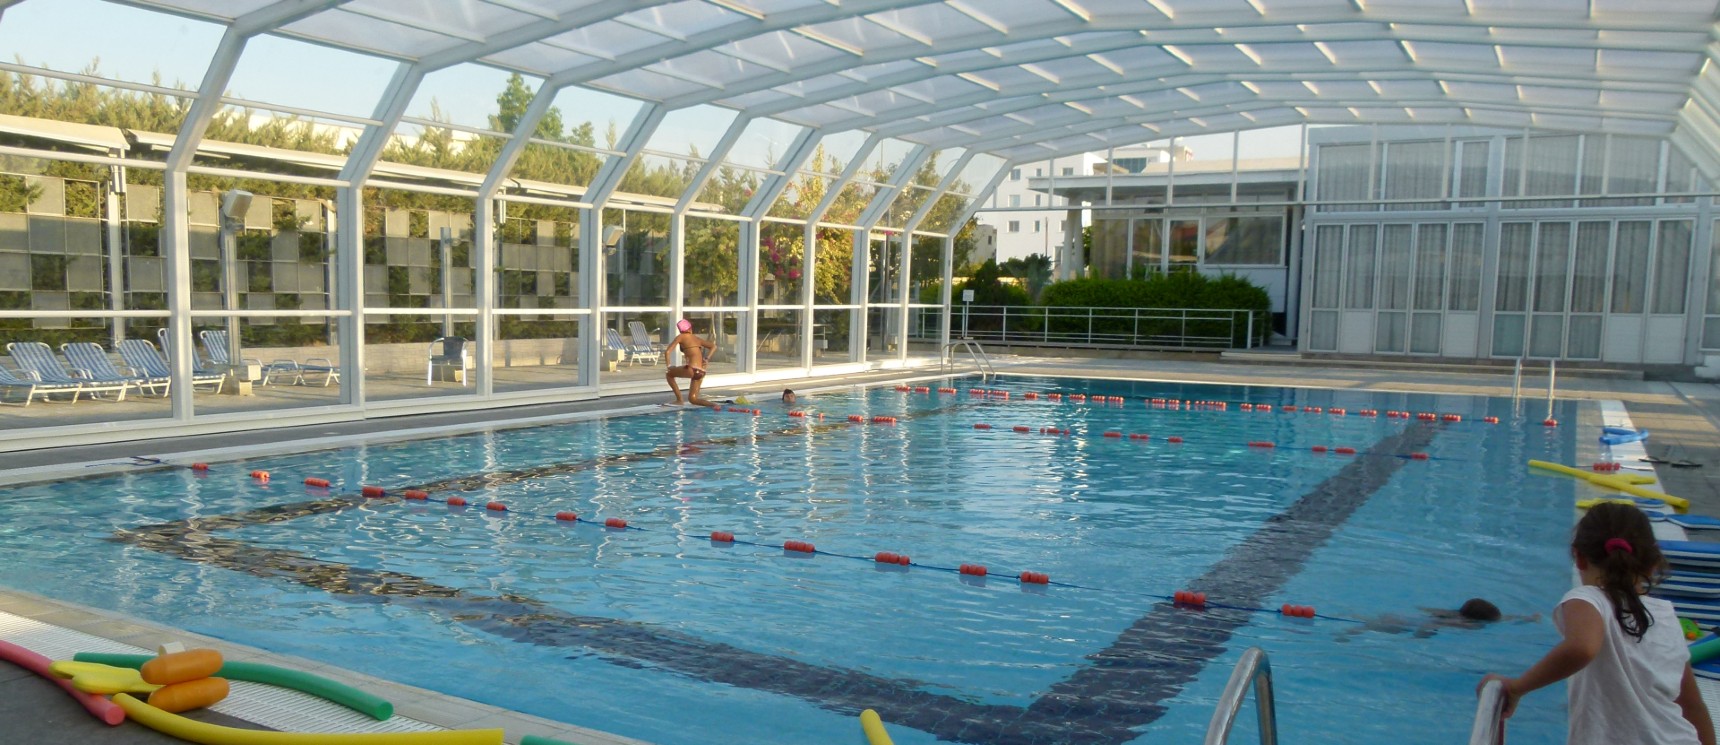 Pool enclosure – Ginger Center, Chypre